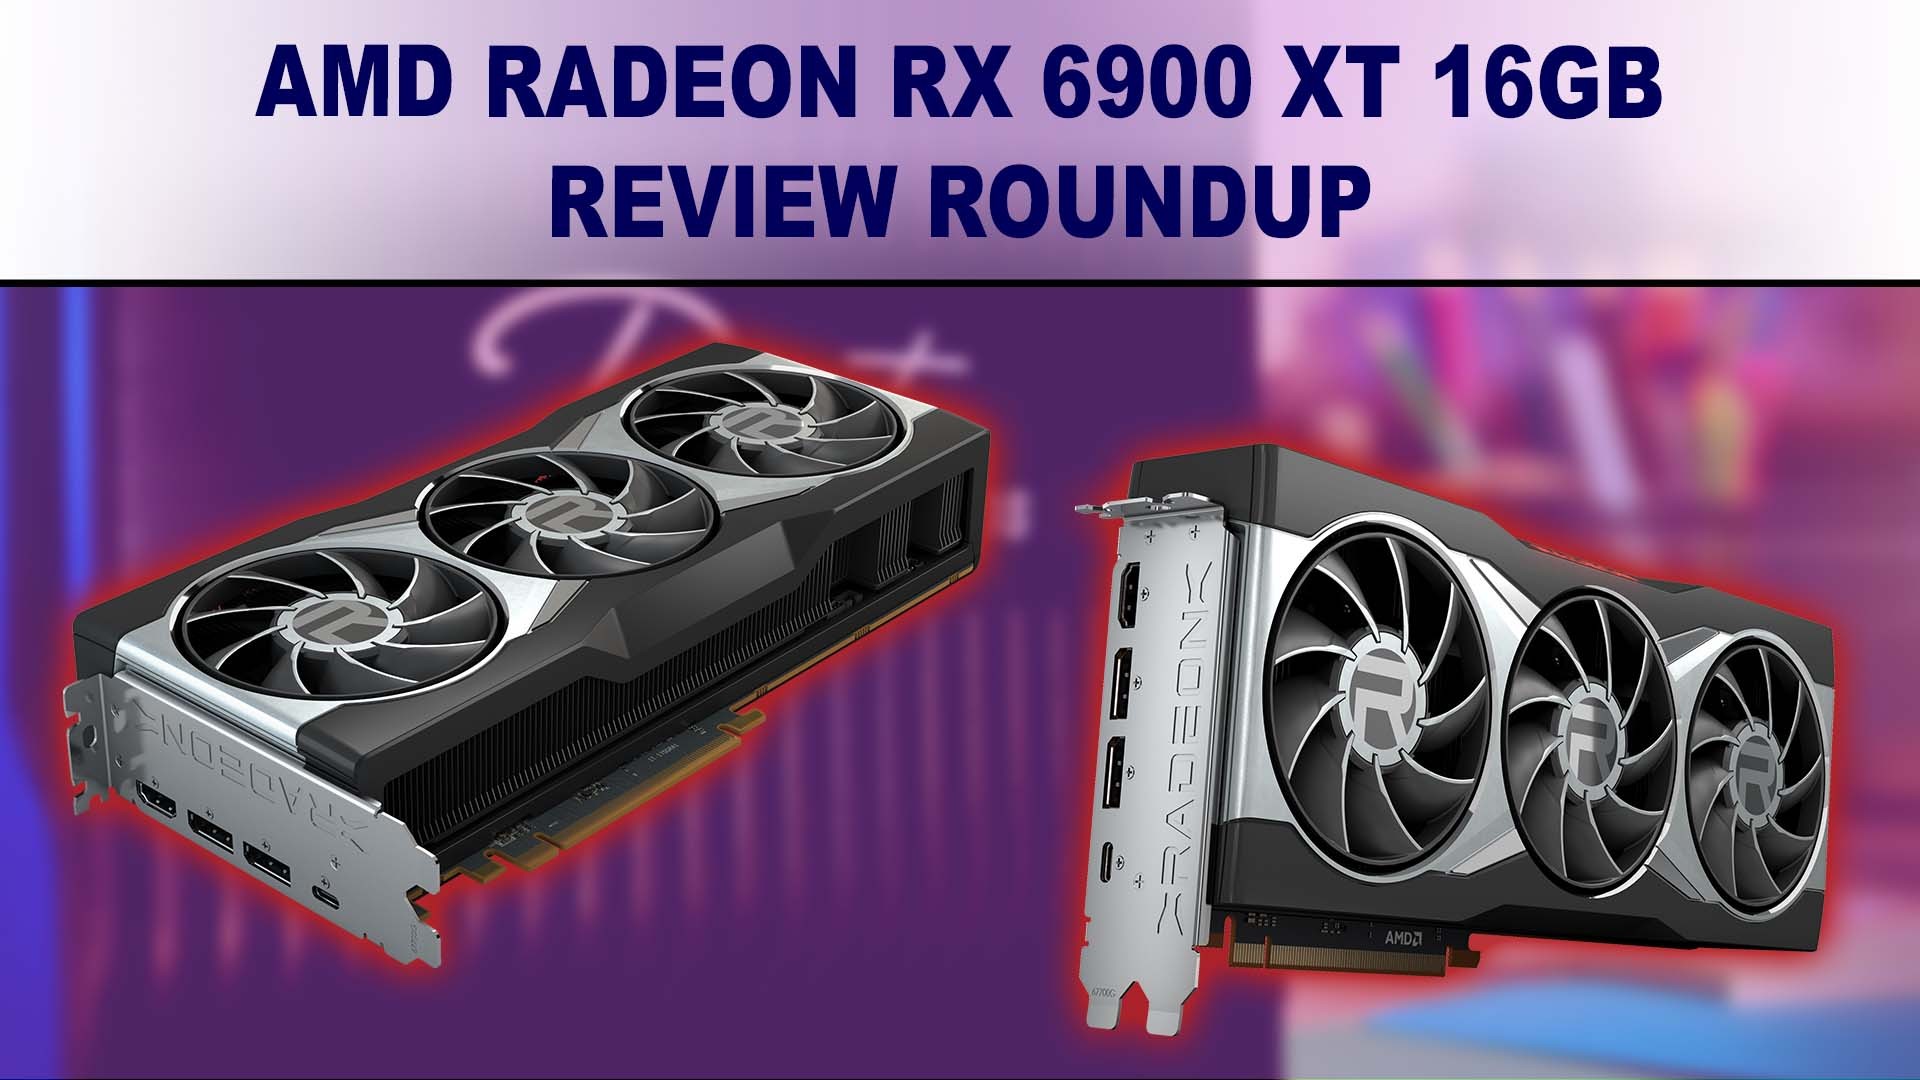 AMD Radeon RX 6900 XT 16GB benchmark review summary